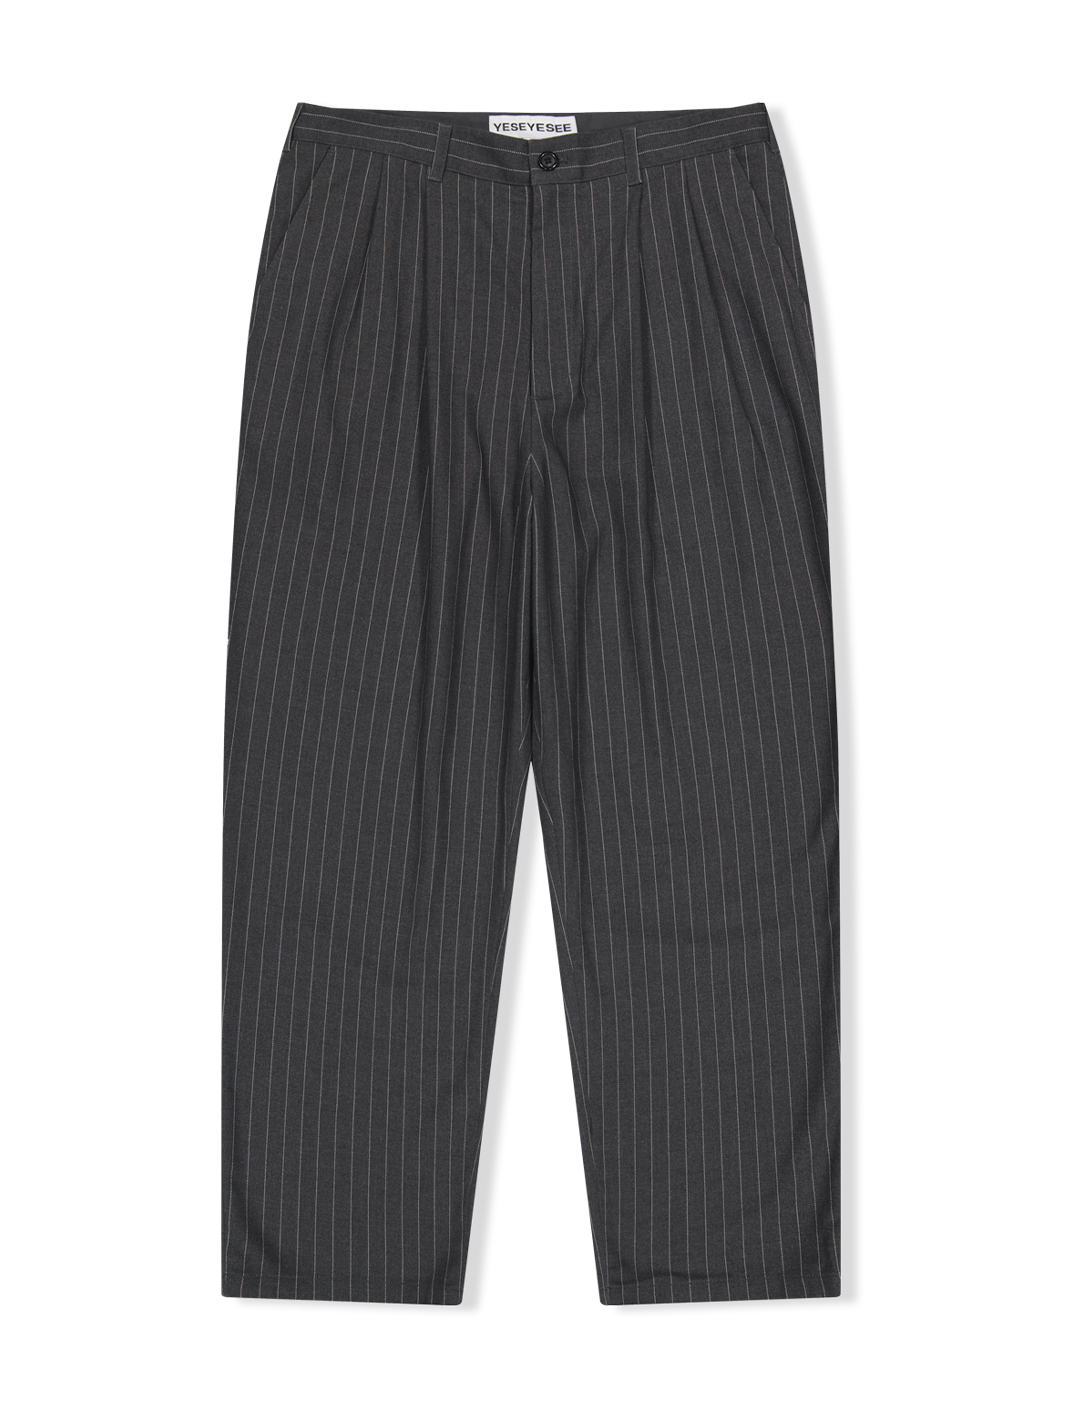 Stripe Tucked Pants Charcoal